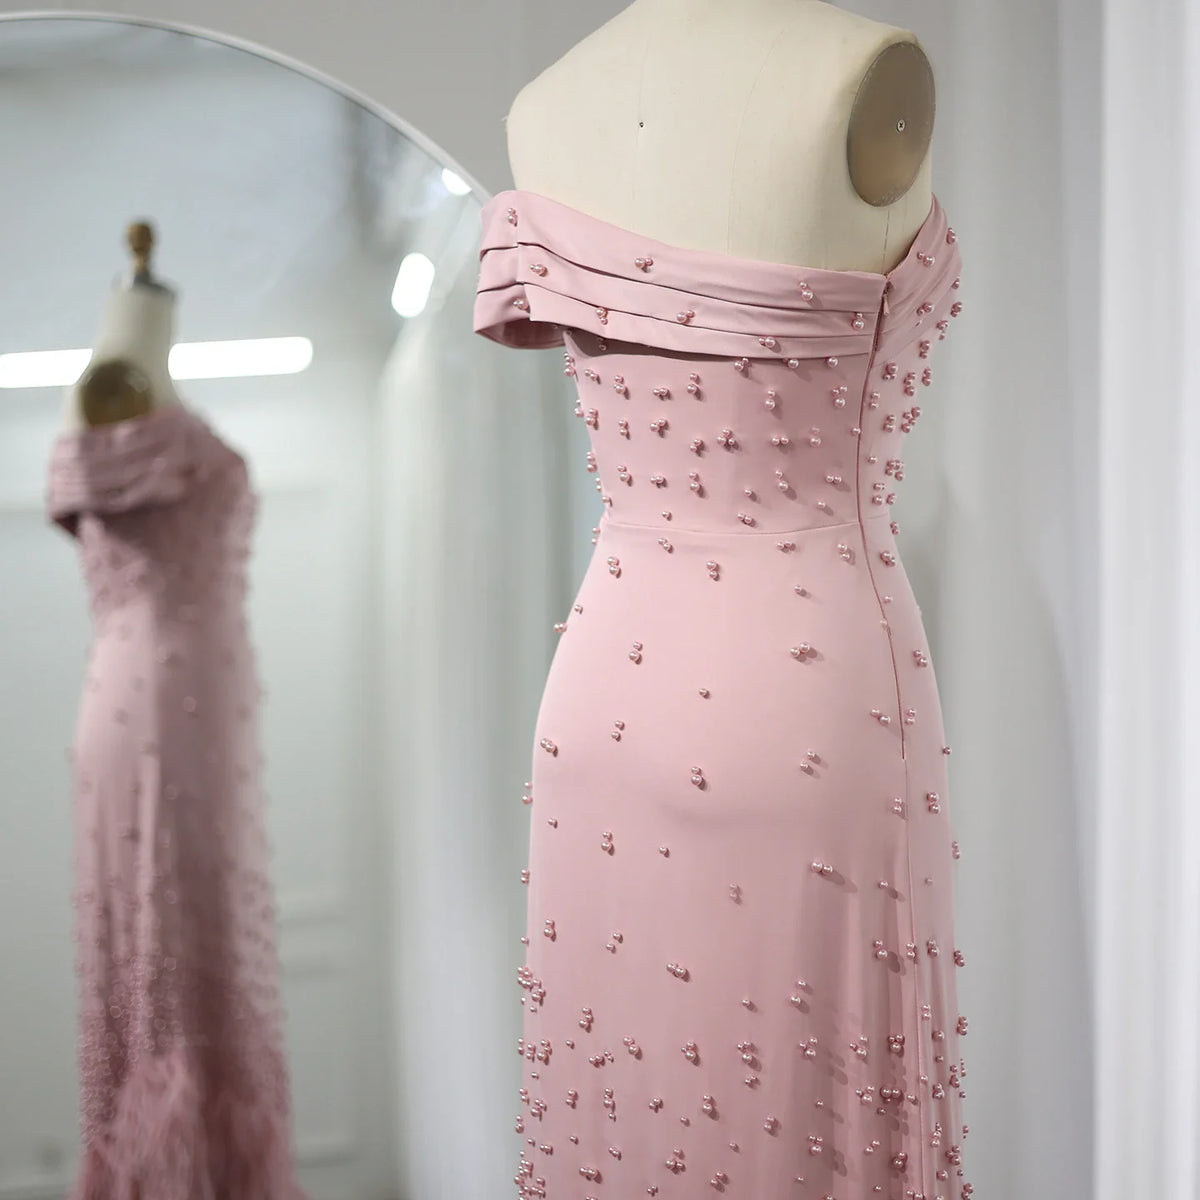 Dreamy VowLuxury Feathers Dubai Pink Mermaid Evening Dress for Women Wedding Sage Green One Shoulder Arabic Party Gowns 388